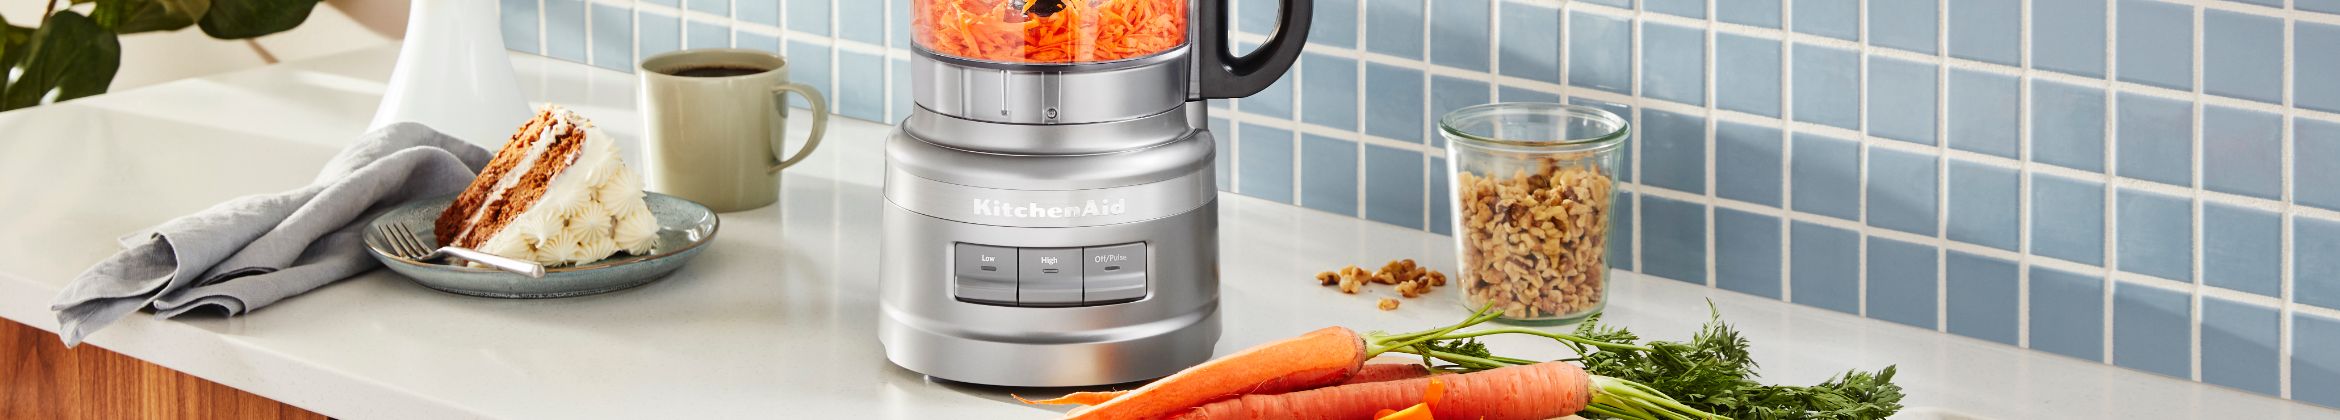 KitchenAid Silver Food Processor grinding carrots